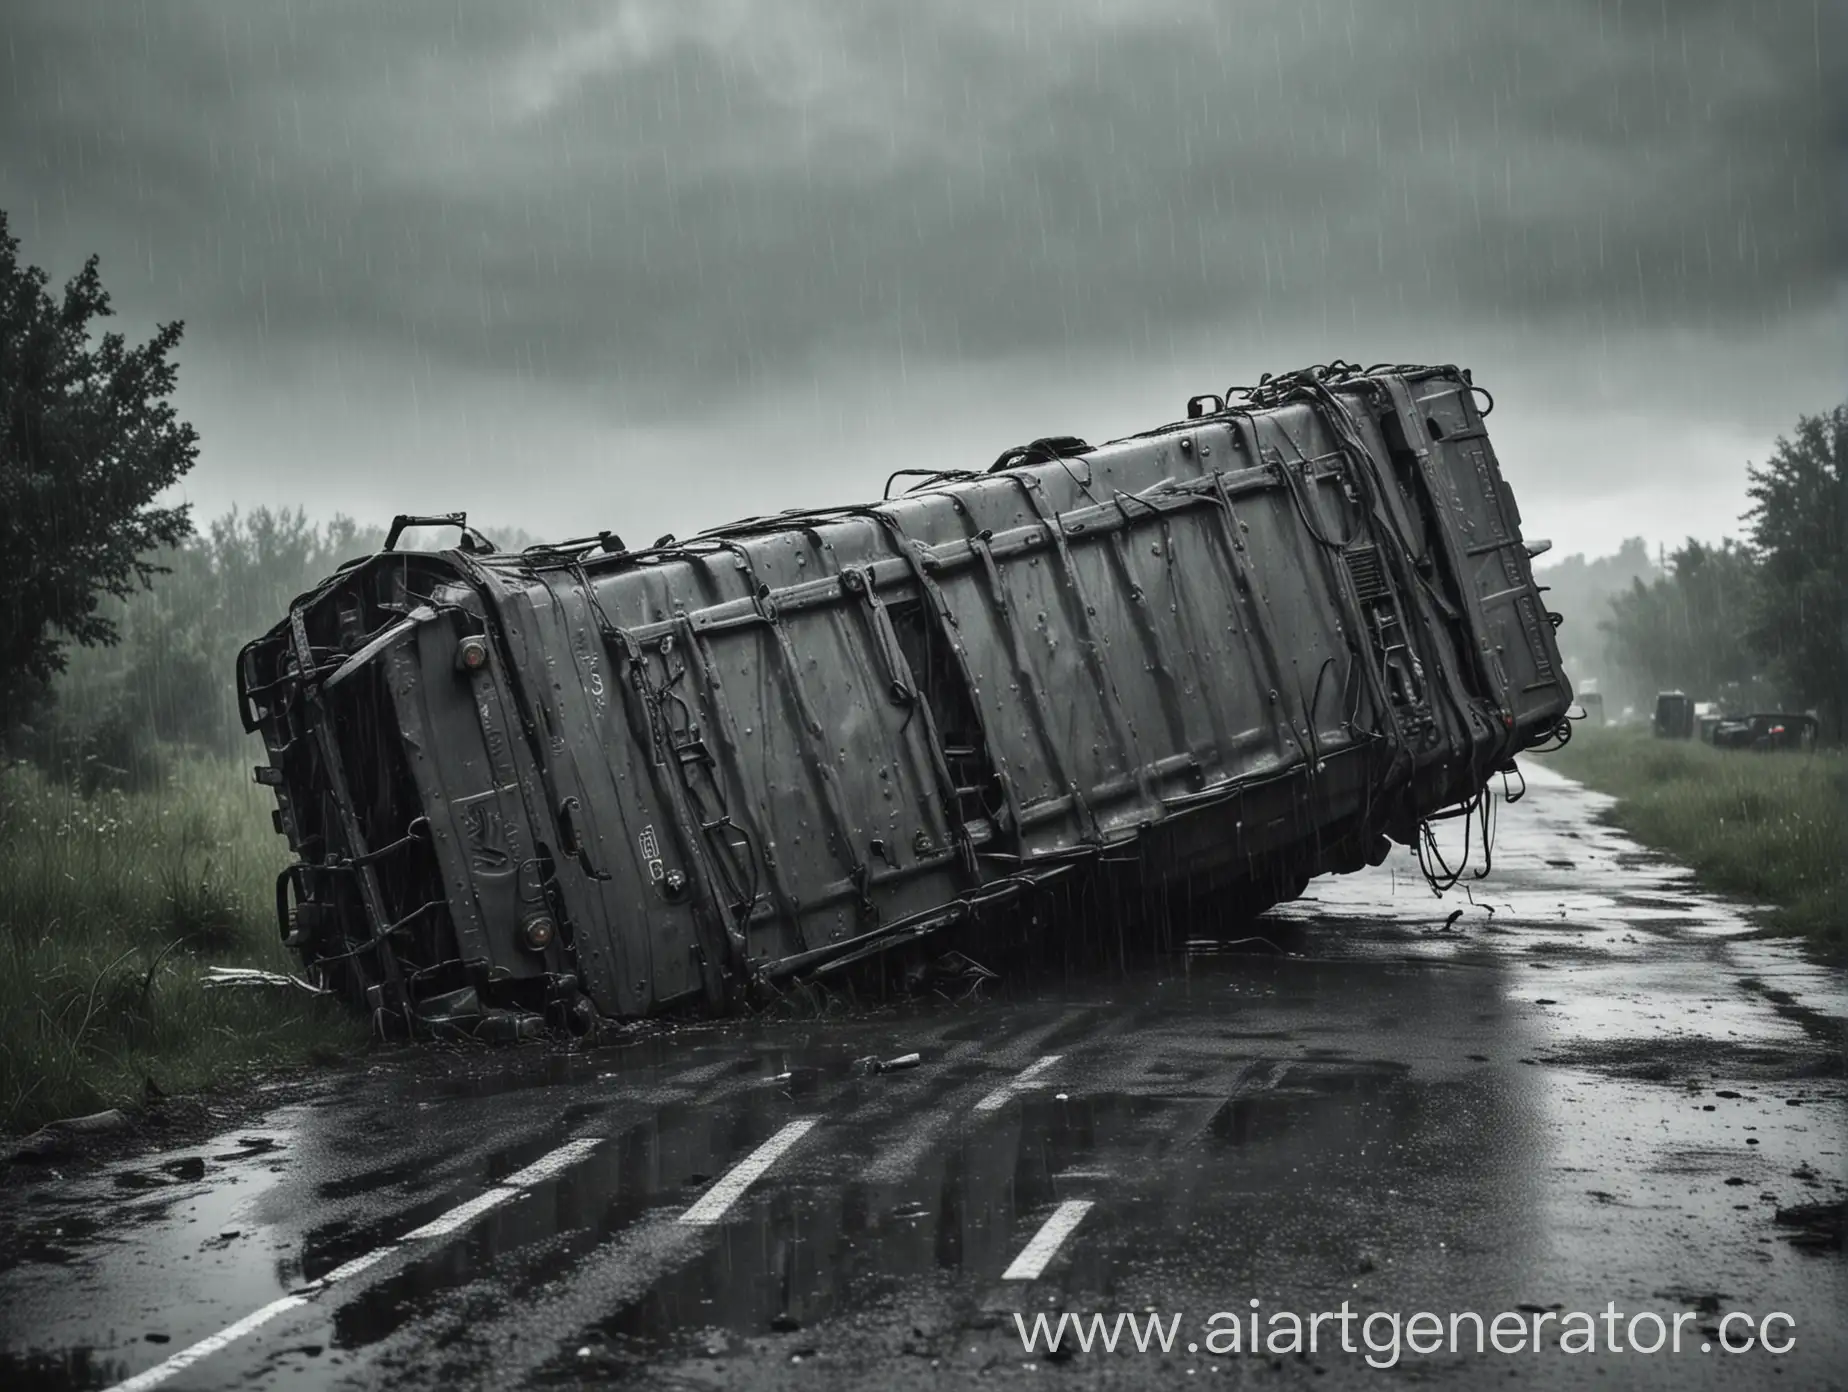 Rainy-Truck-Accident-Scene-Overturned-Truck-in-Gray-Tones